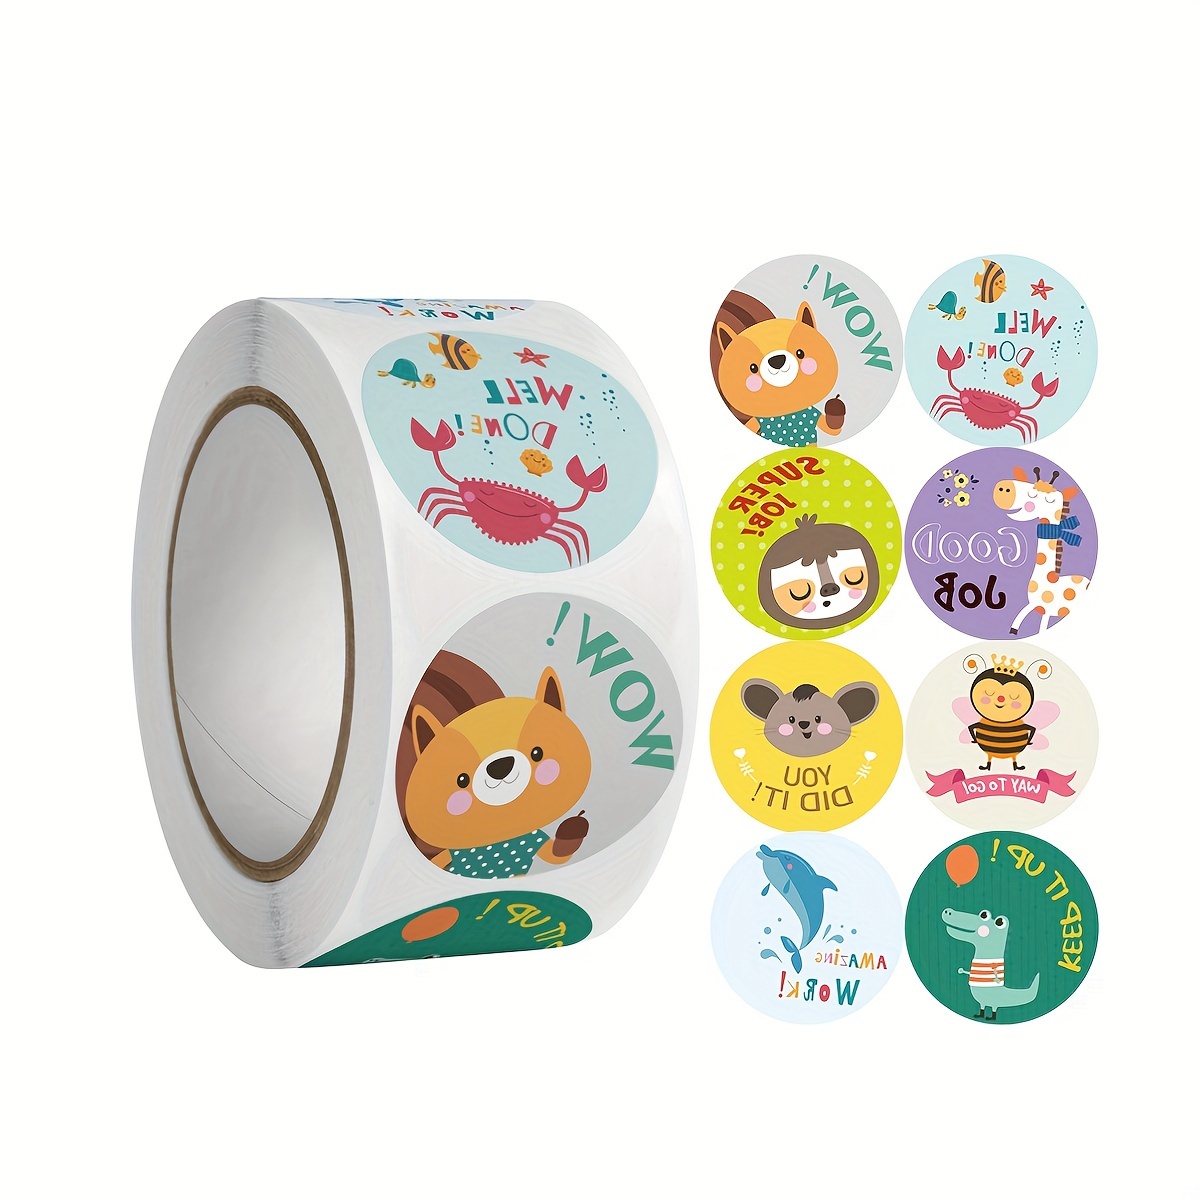 500pcs/Roll Good Job Stickers 1 Inch Cartoon Animal Rainbow Star Reward  Adhesive Tape for Office